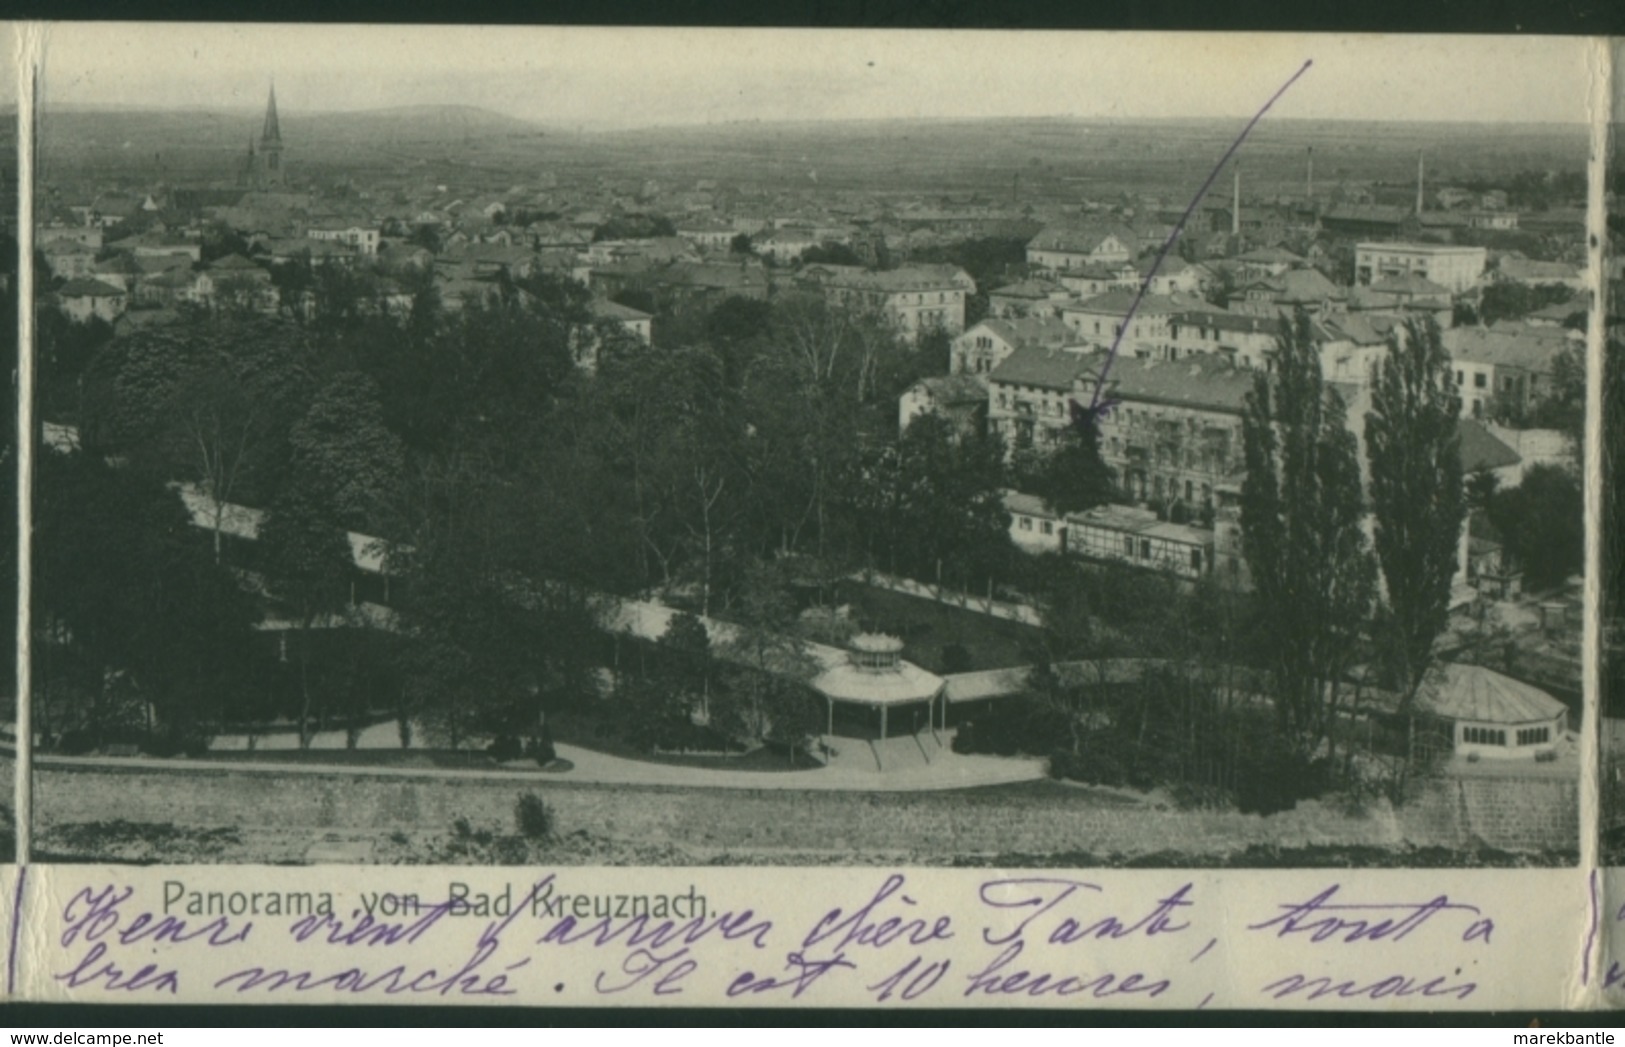 Panorama von Bad Kreuznach - Quad folded postcard - 1903